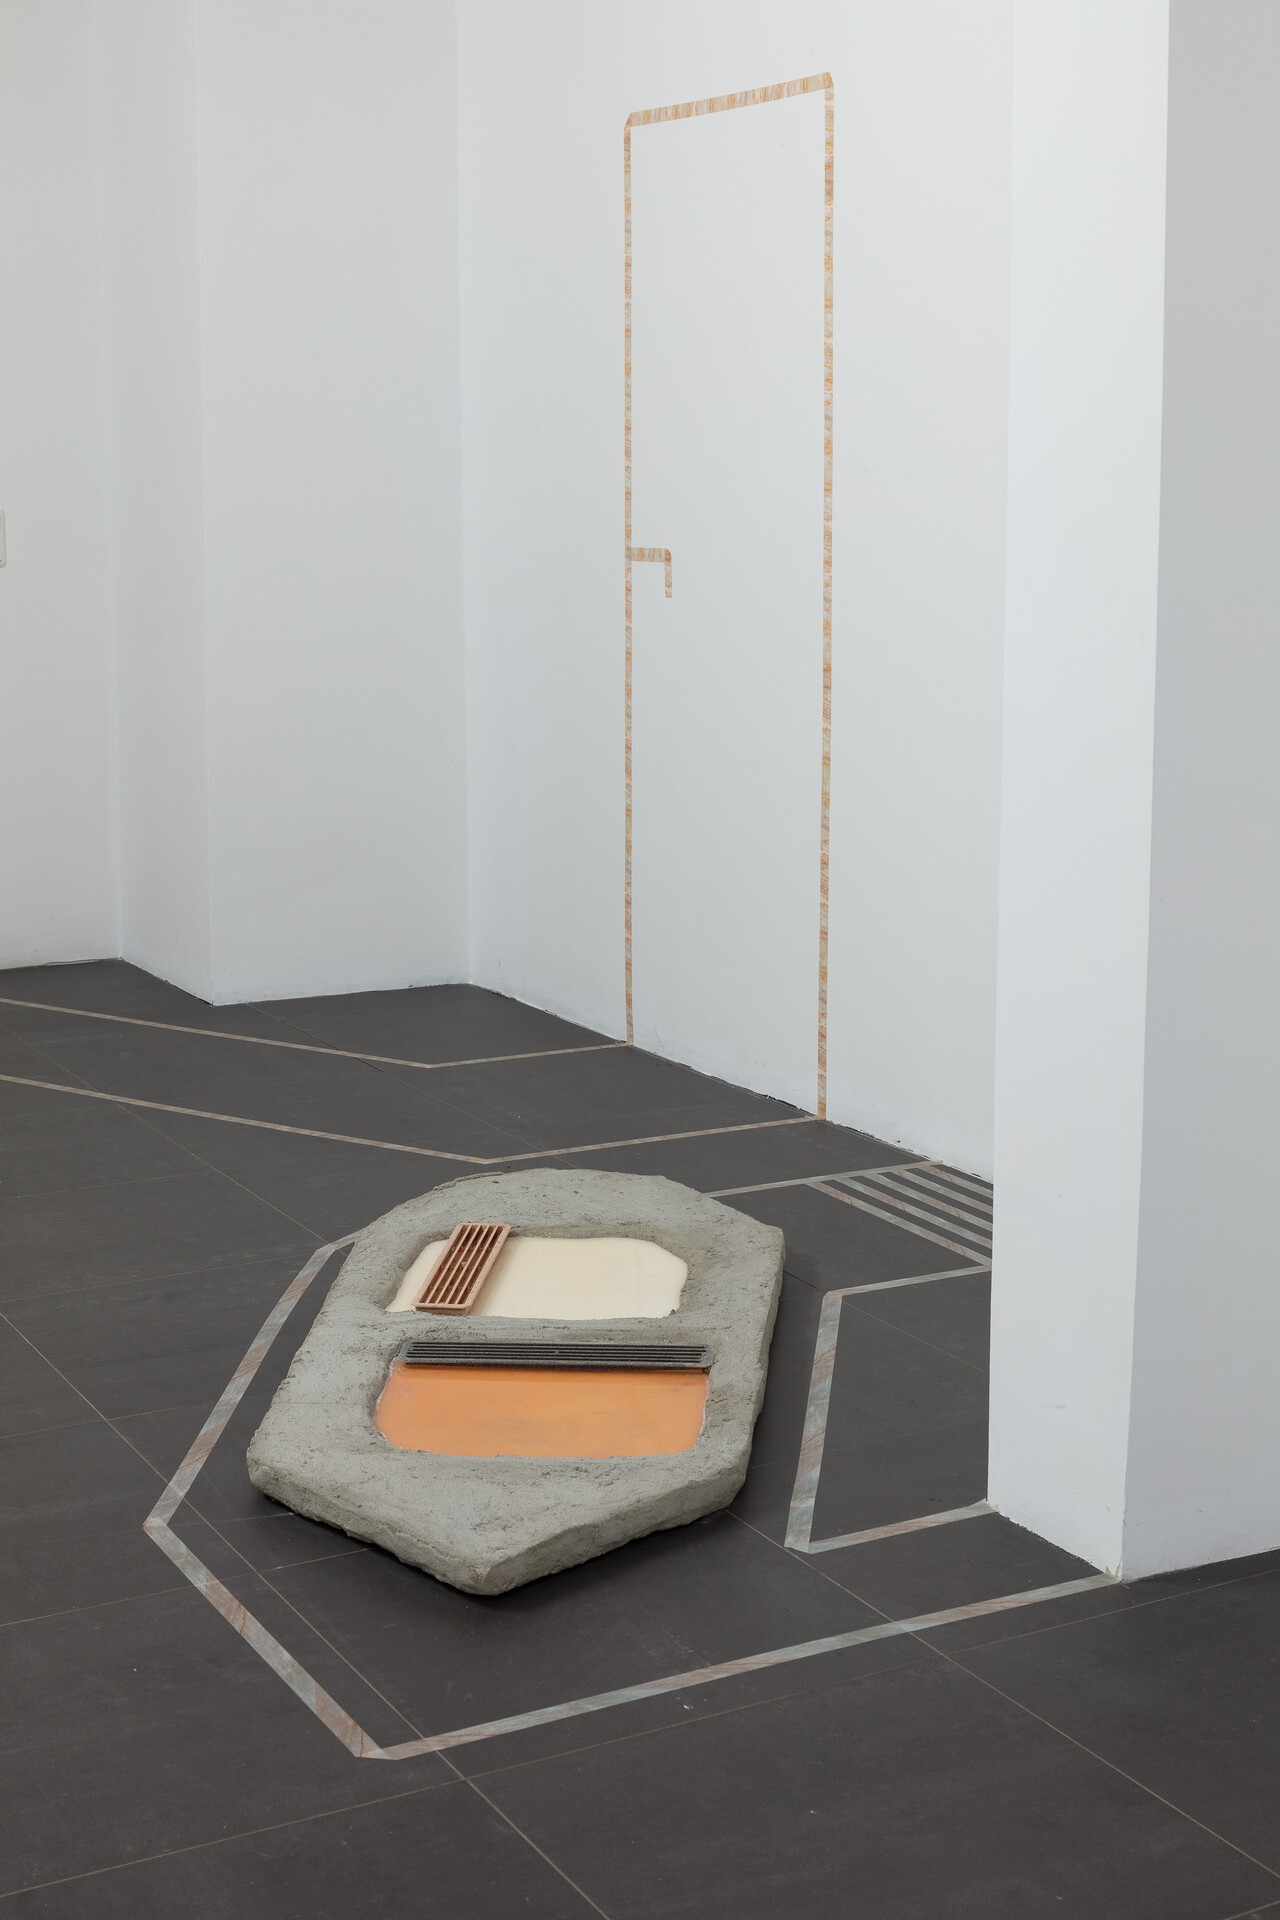 Türe, 200×80cm, 2019, Masking tape / Beet, 210 x 45 x 6 cm, 2019, Concrete, Epoxy resin, Plastics